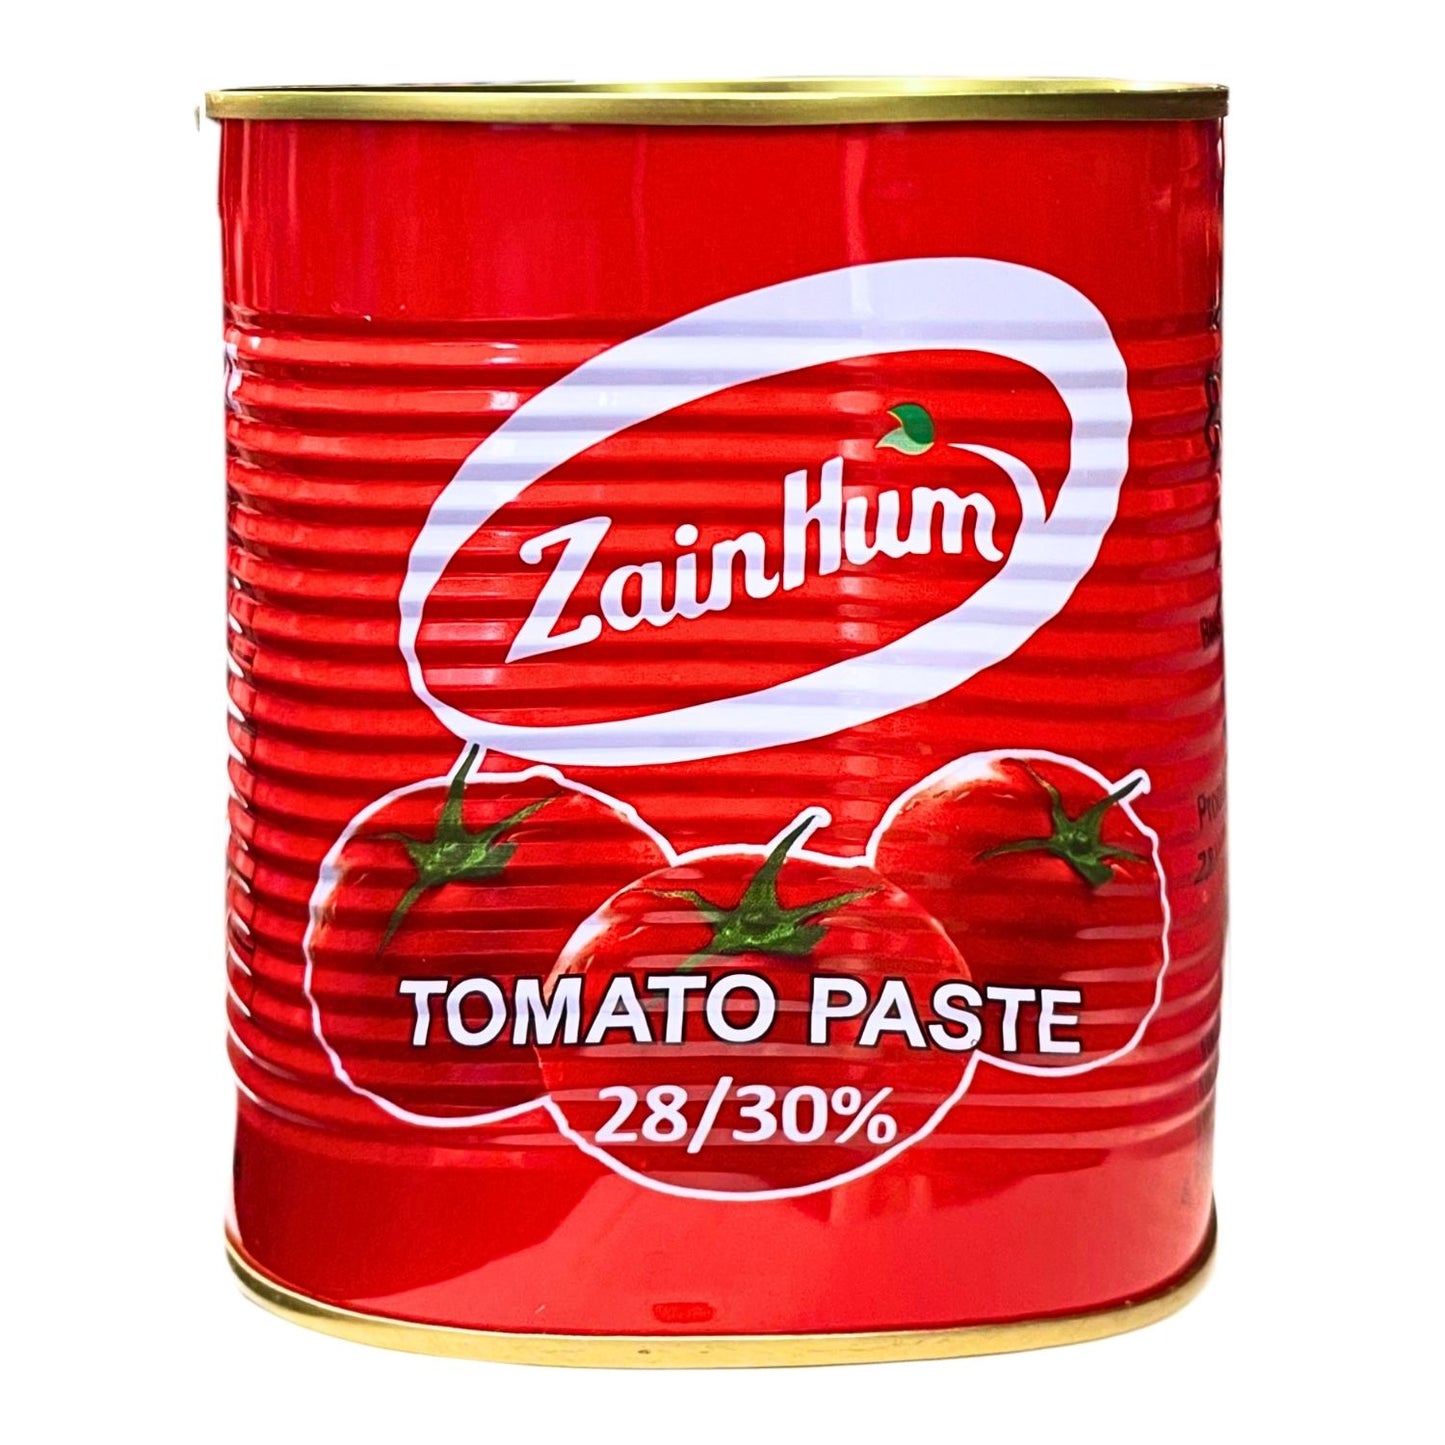 Zainhum Tomato Paste